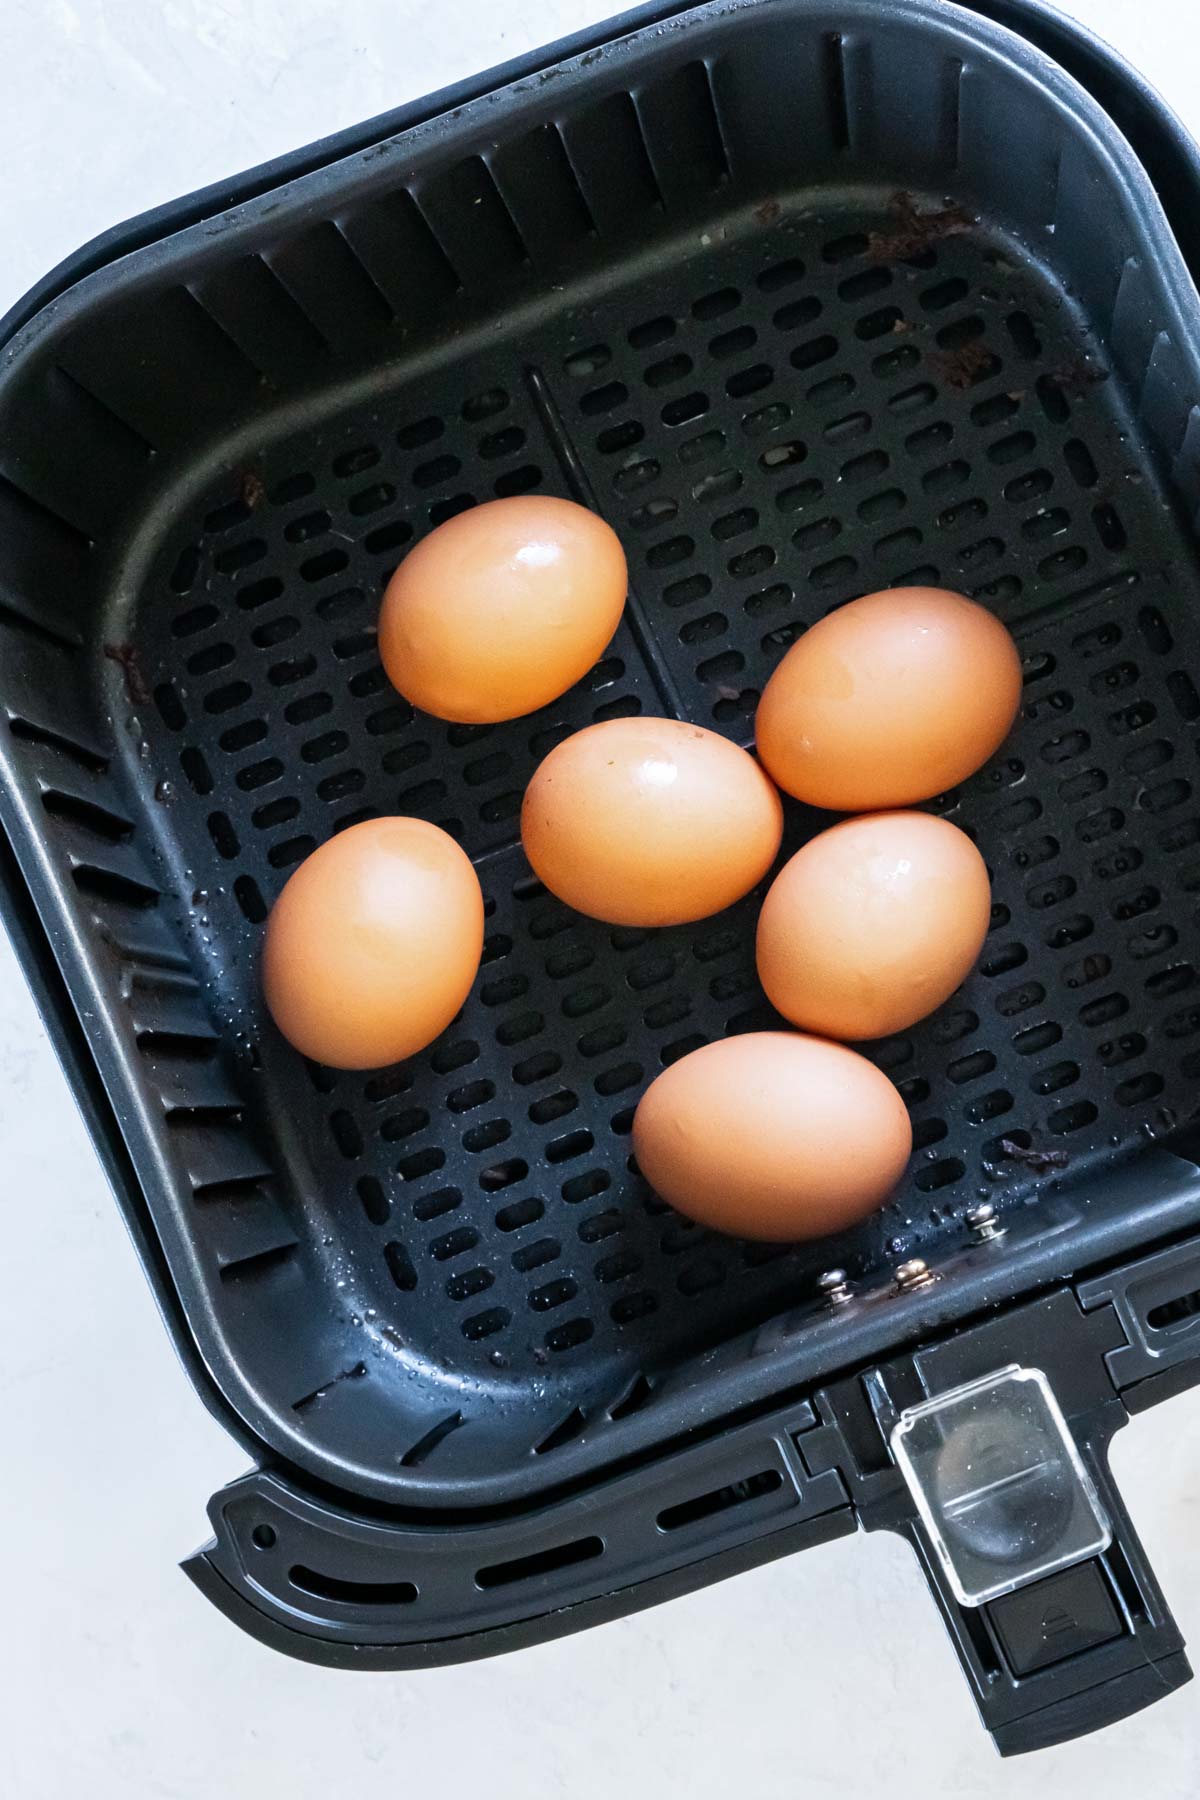 Six hard boiled eggs in an air fryer.